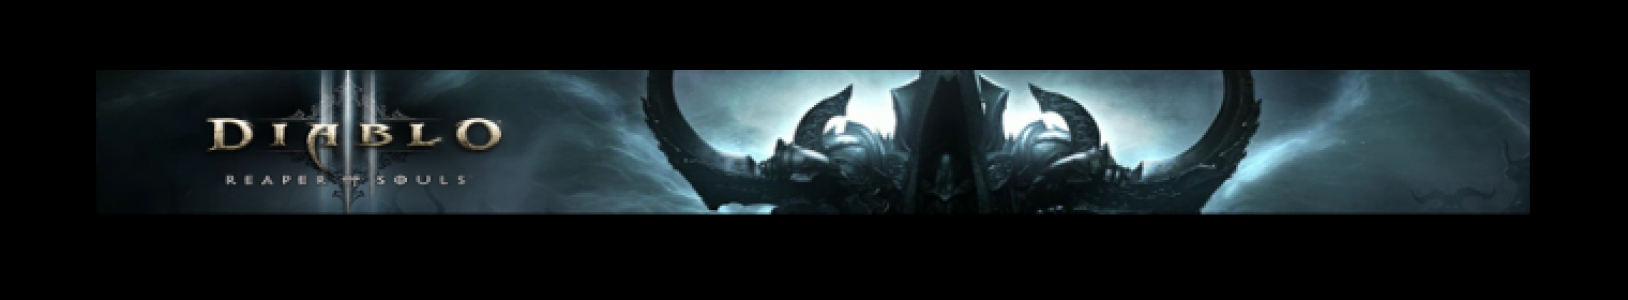 Diablo III: Reaper of Souls banner